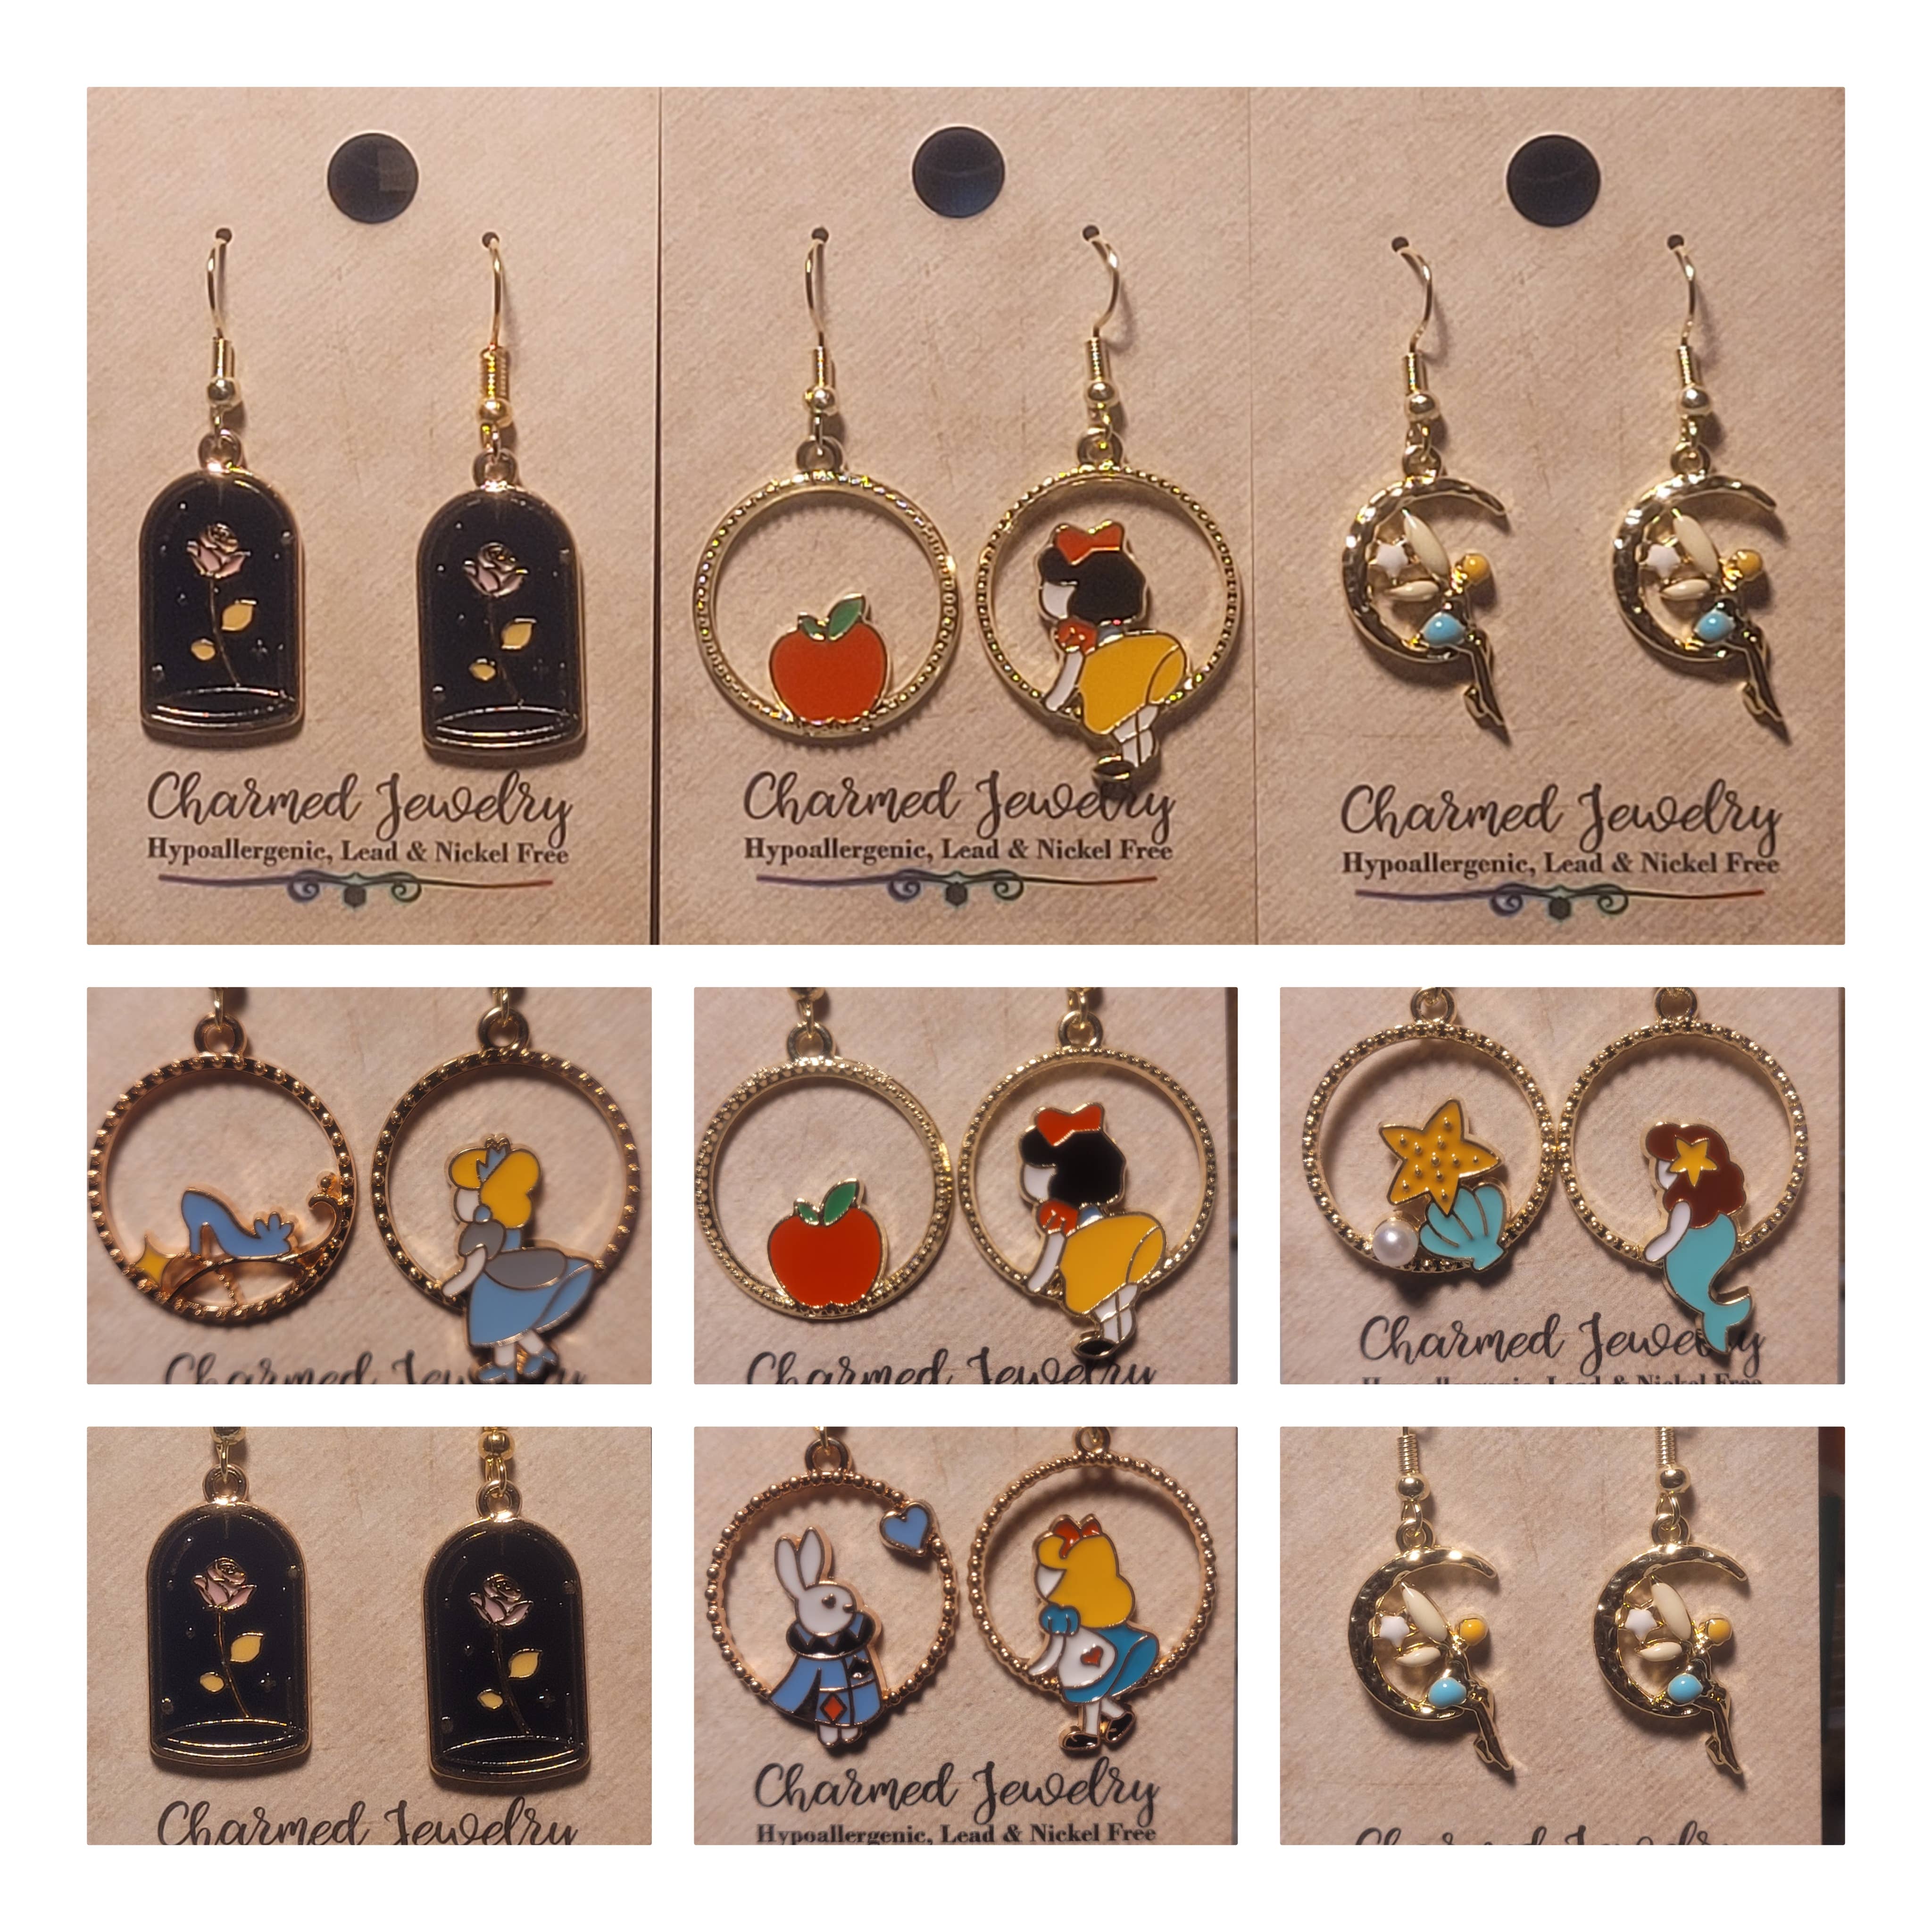 Accesorios  Disney jewelry, Alice in wonderland disney, Disney